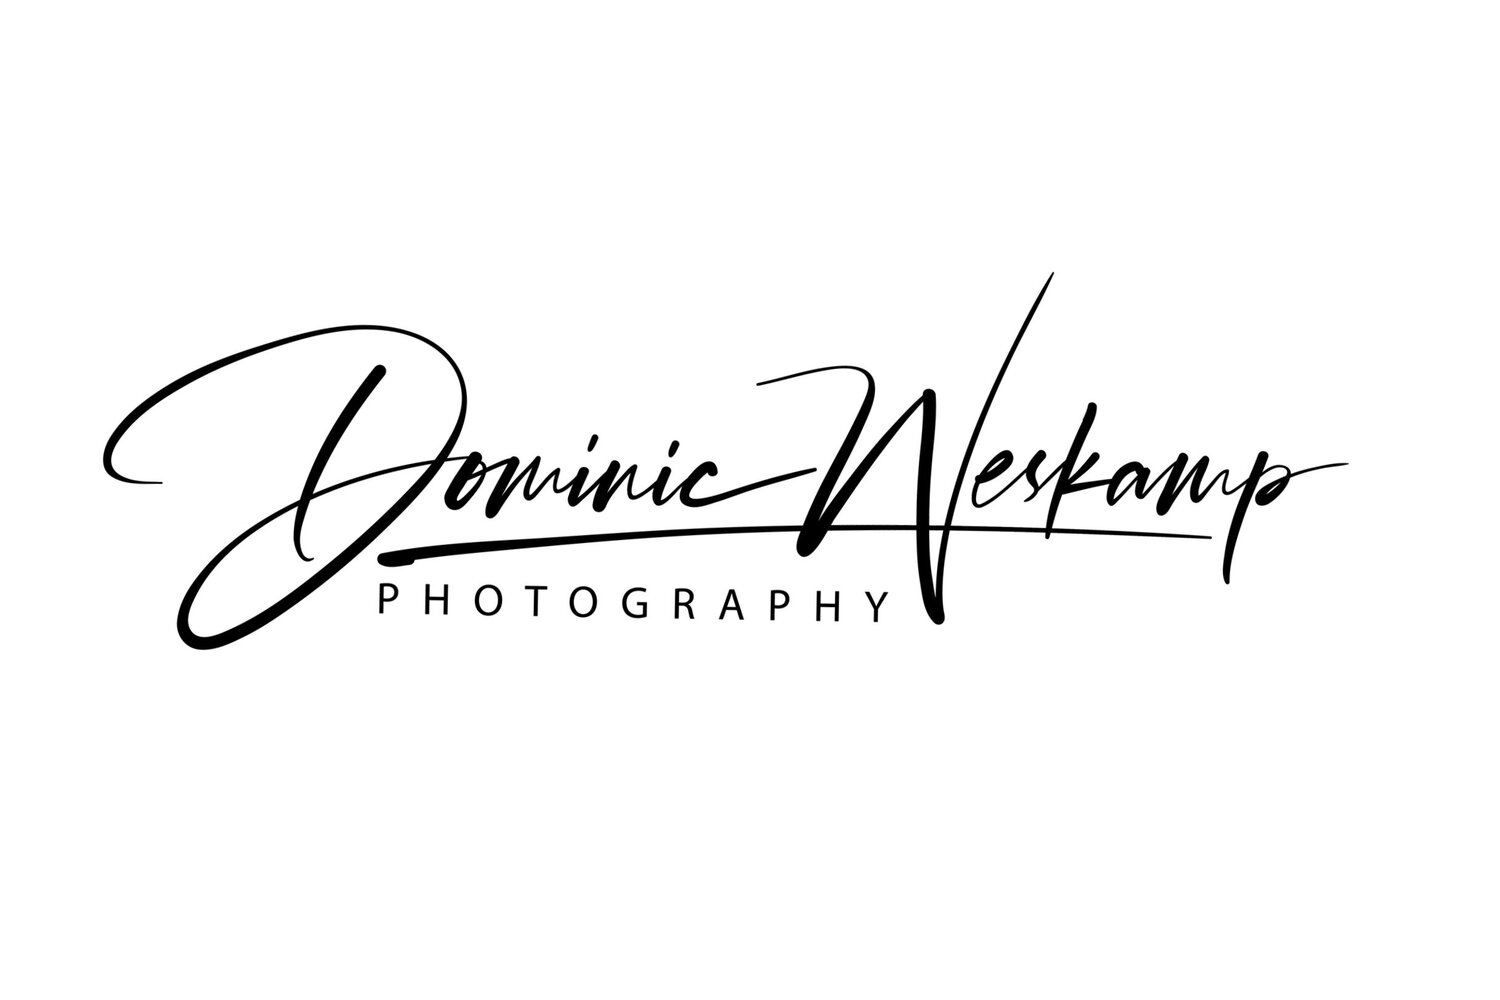 Dominic Weskamp Photography